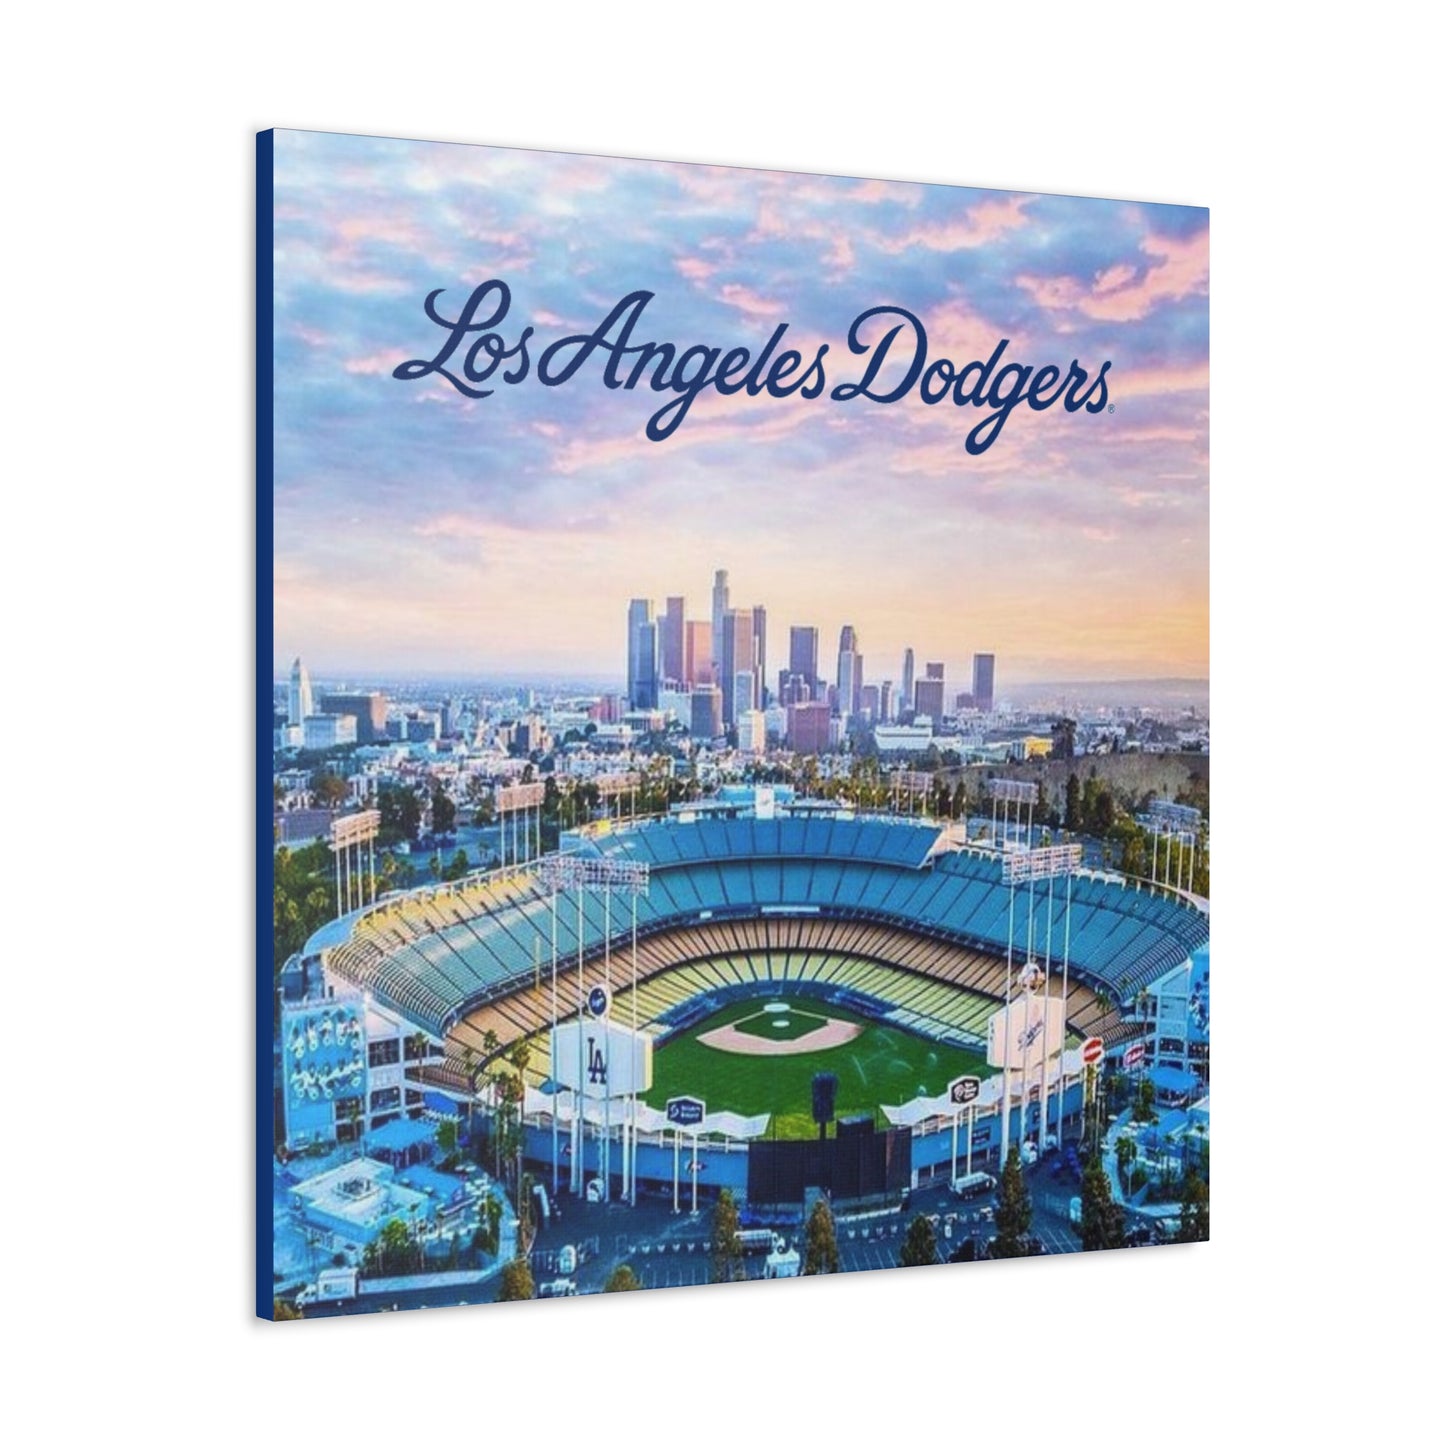 Los Angeles Dodgers - Canvas Gallery Wraps